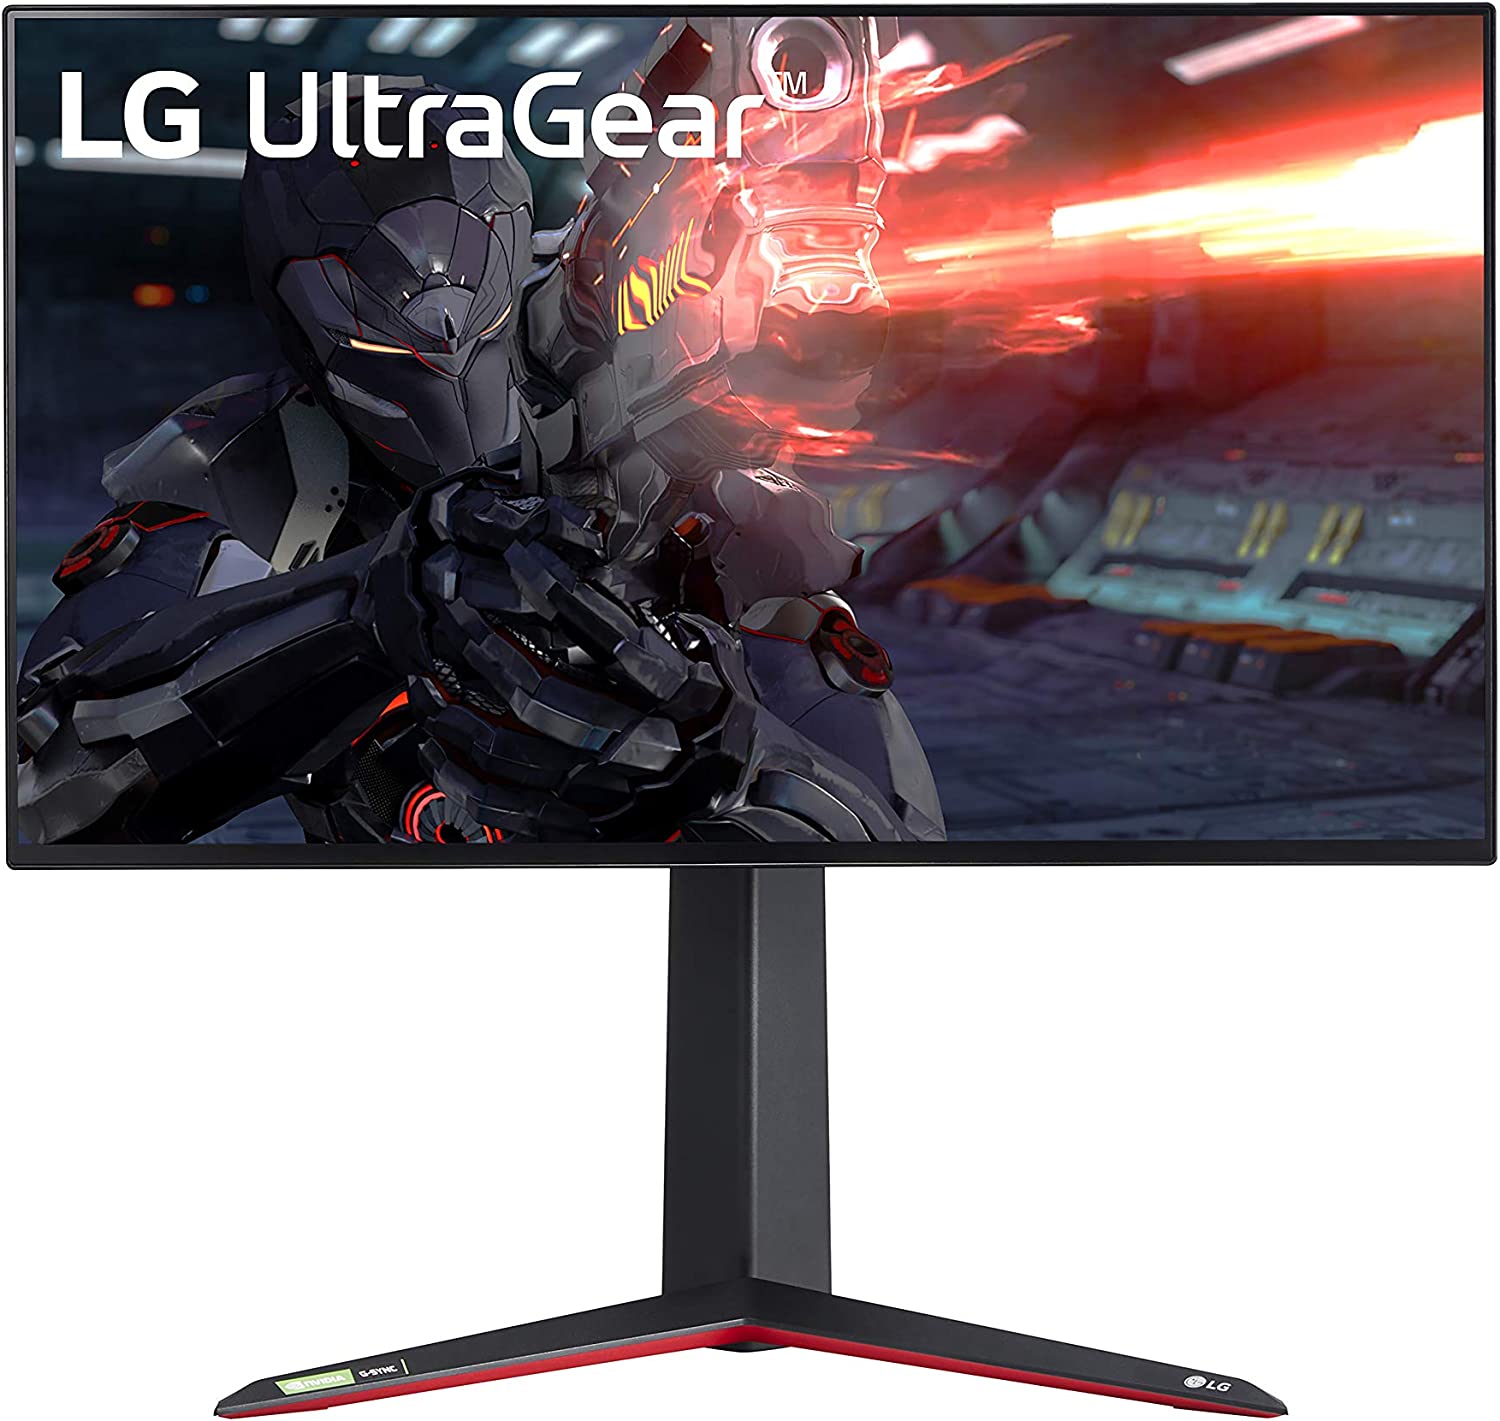  LG Ultragear Gaming Monitor